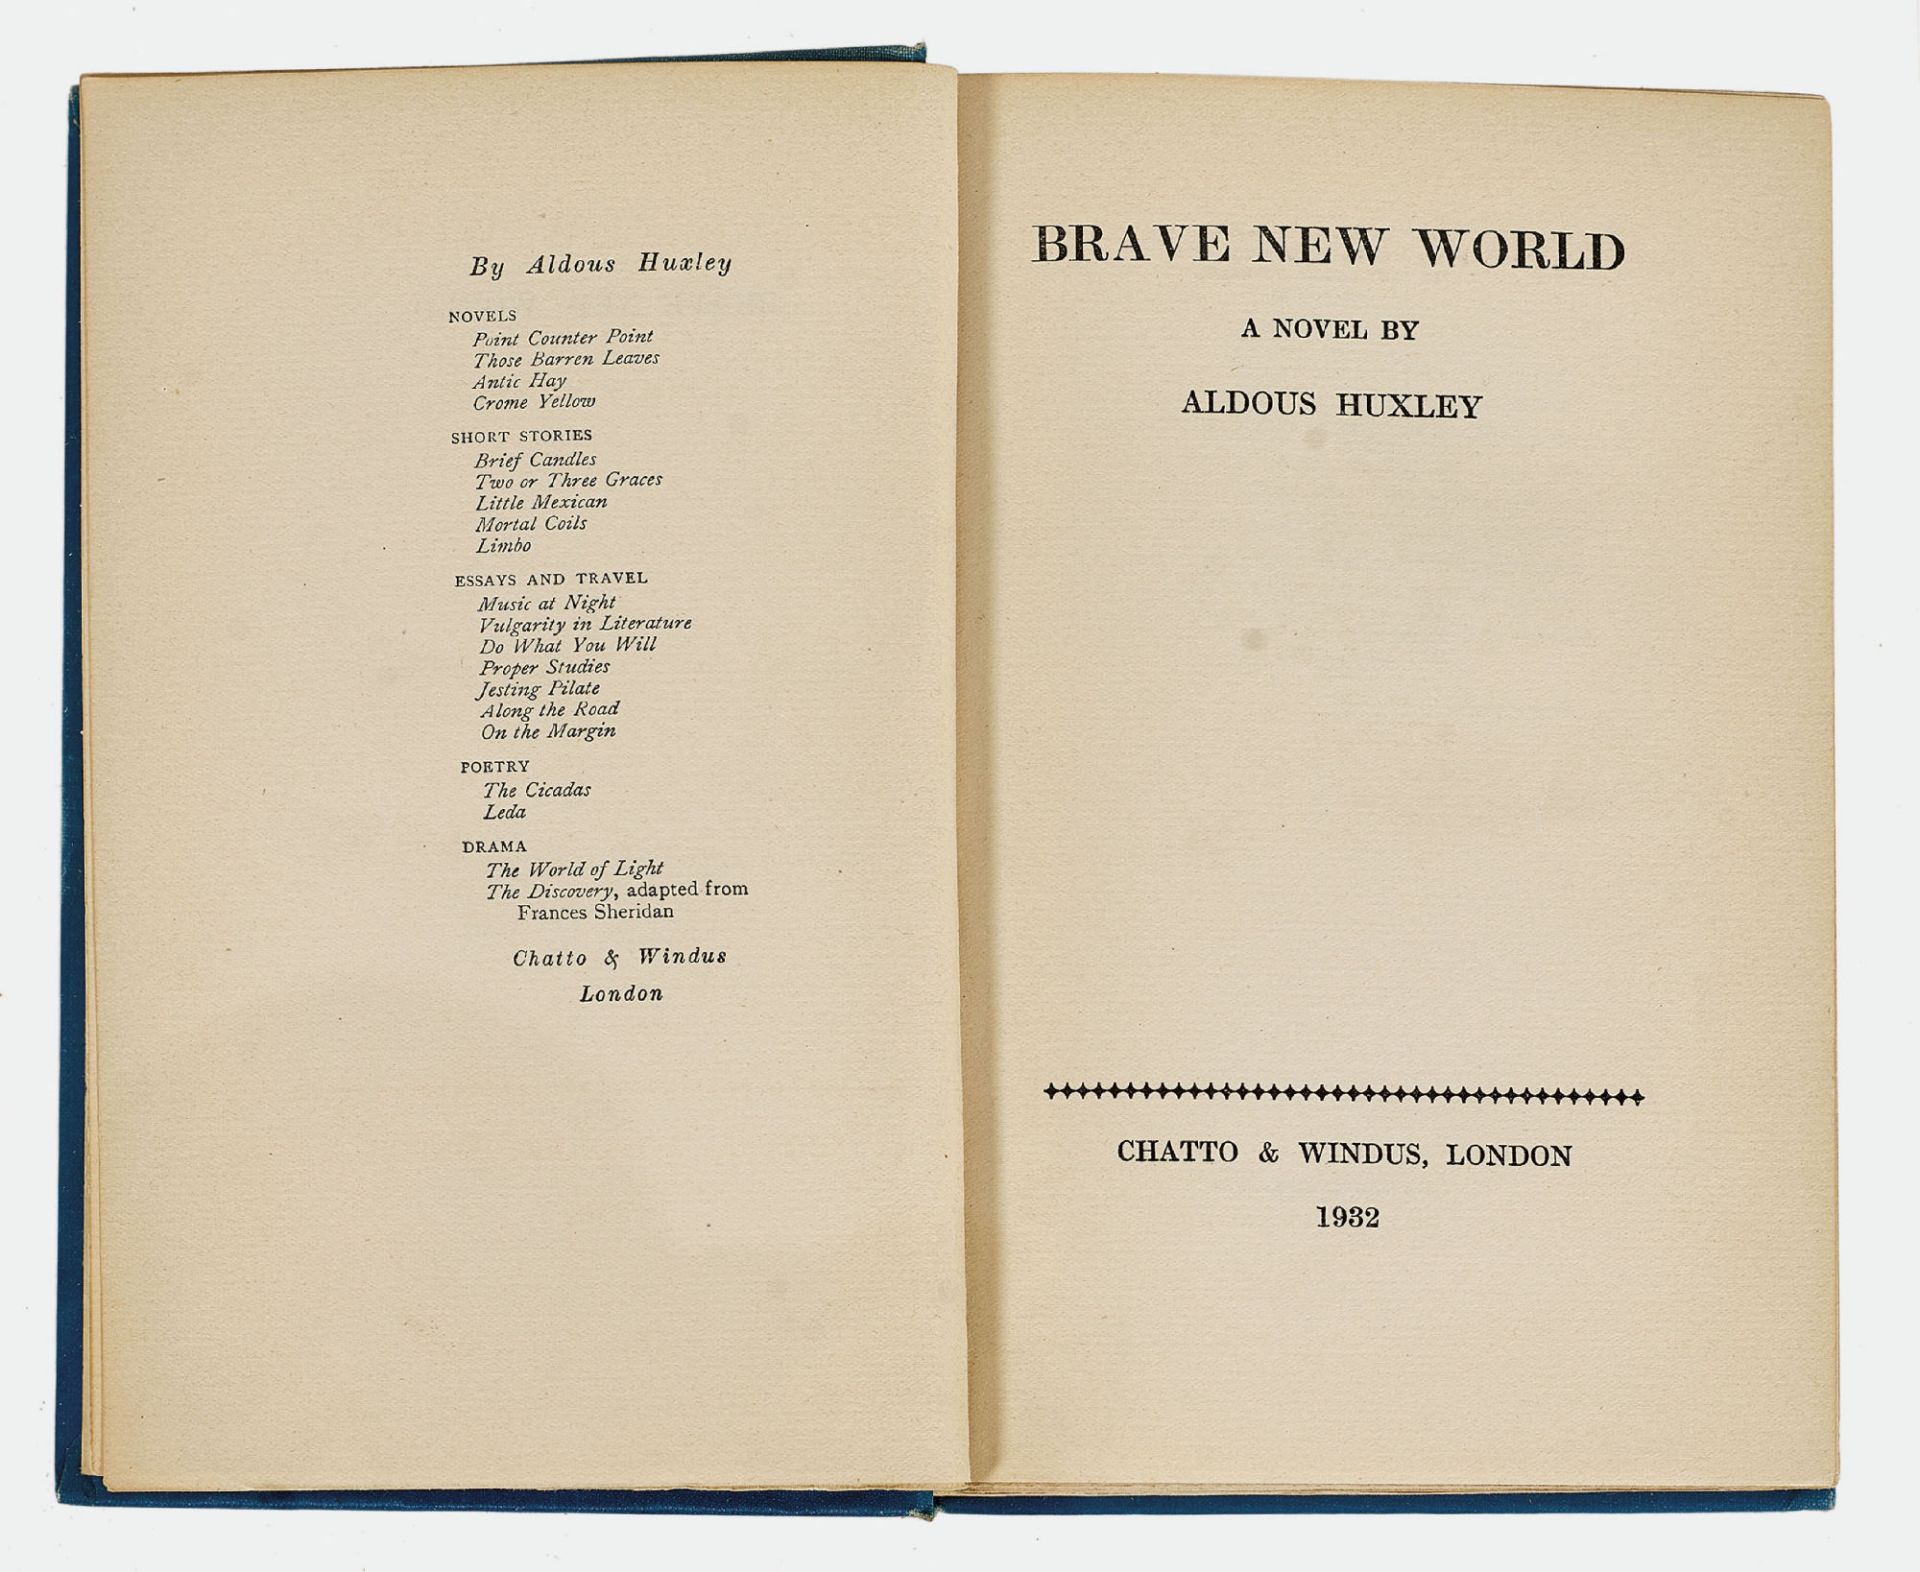 HUXLEY, ALDOUS: "Brave new world".